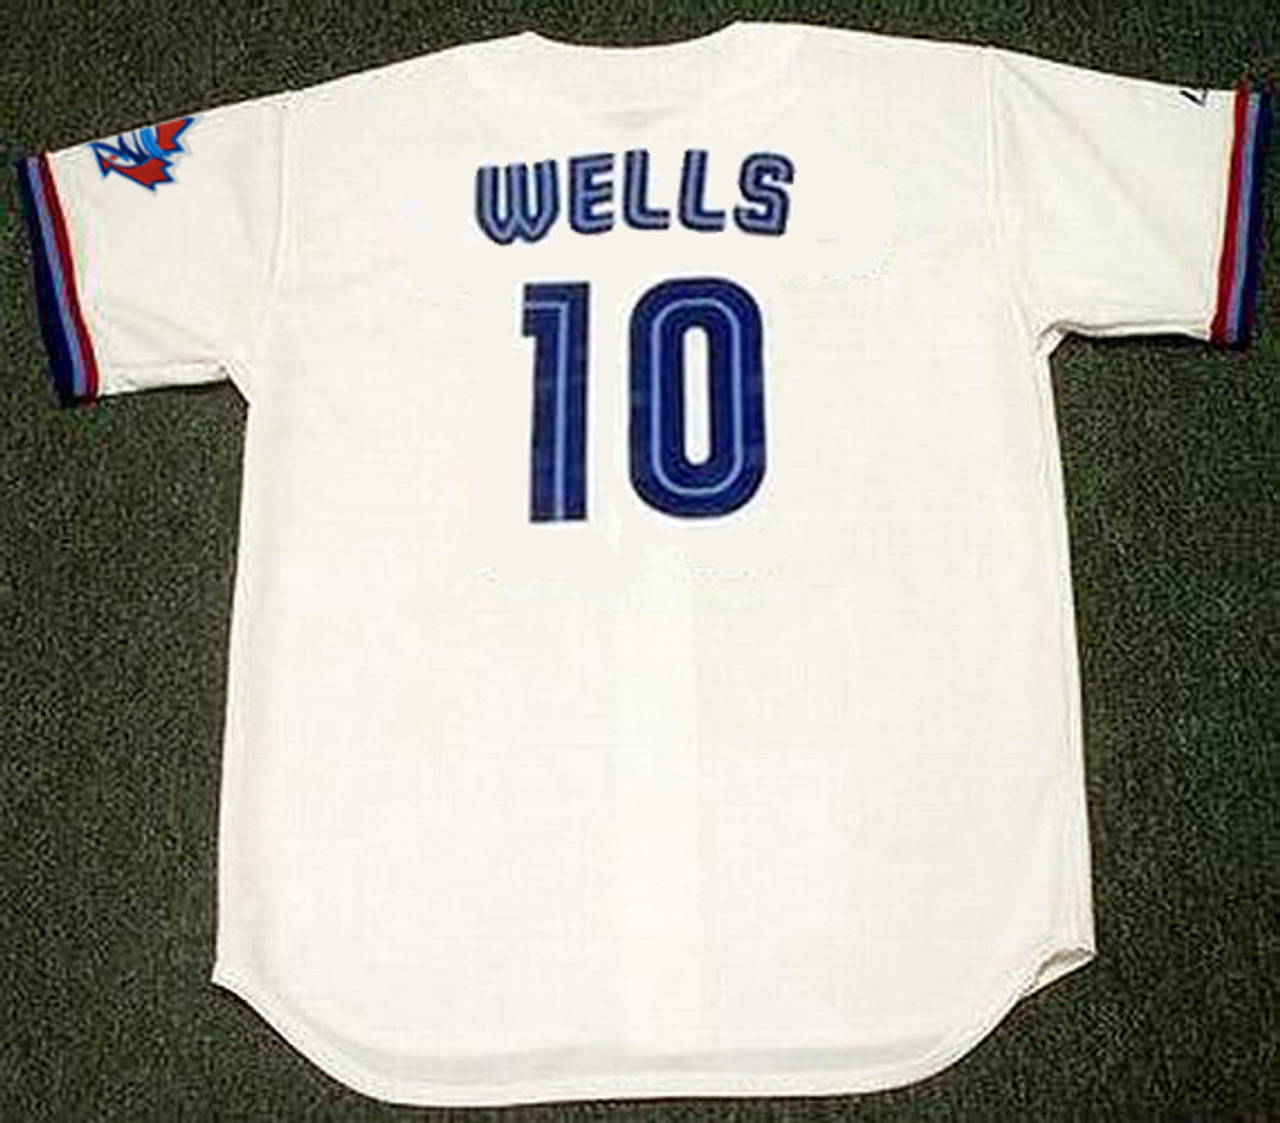 Vernon Wells player worn jersey patch baseball card (Toronto Blue